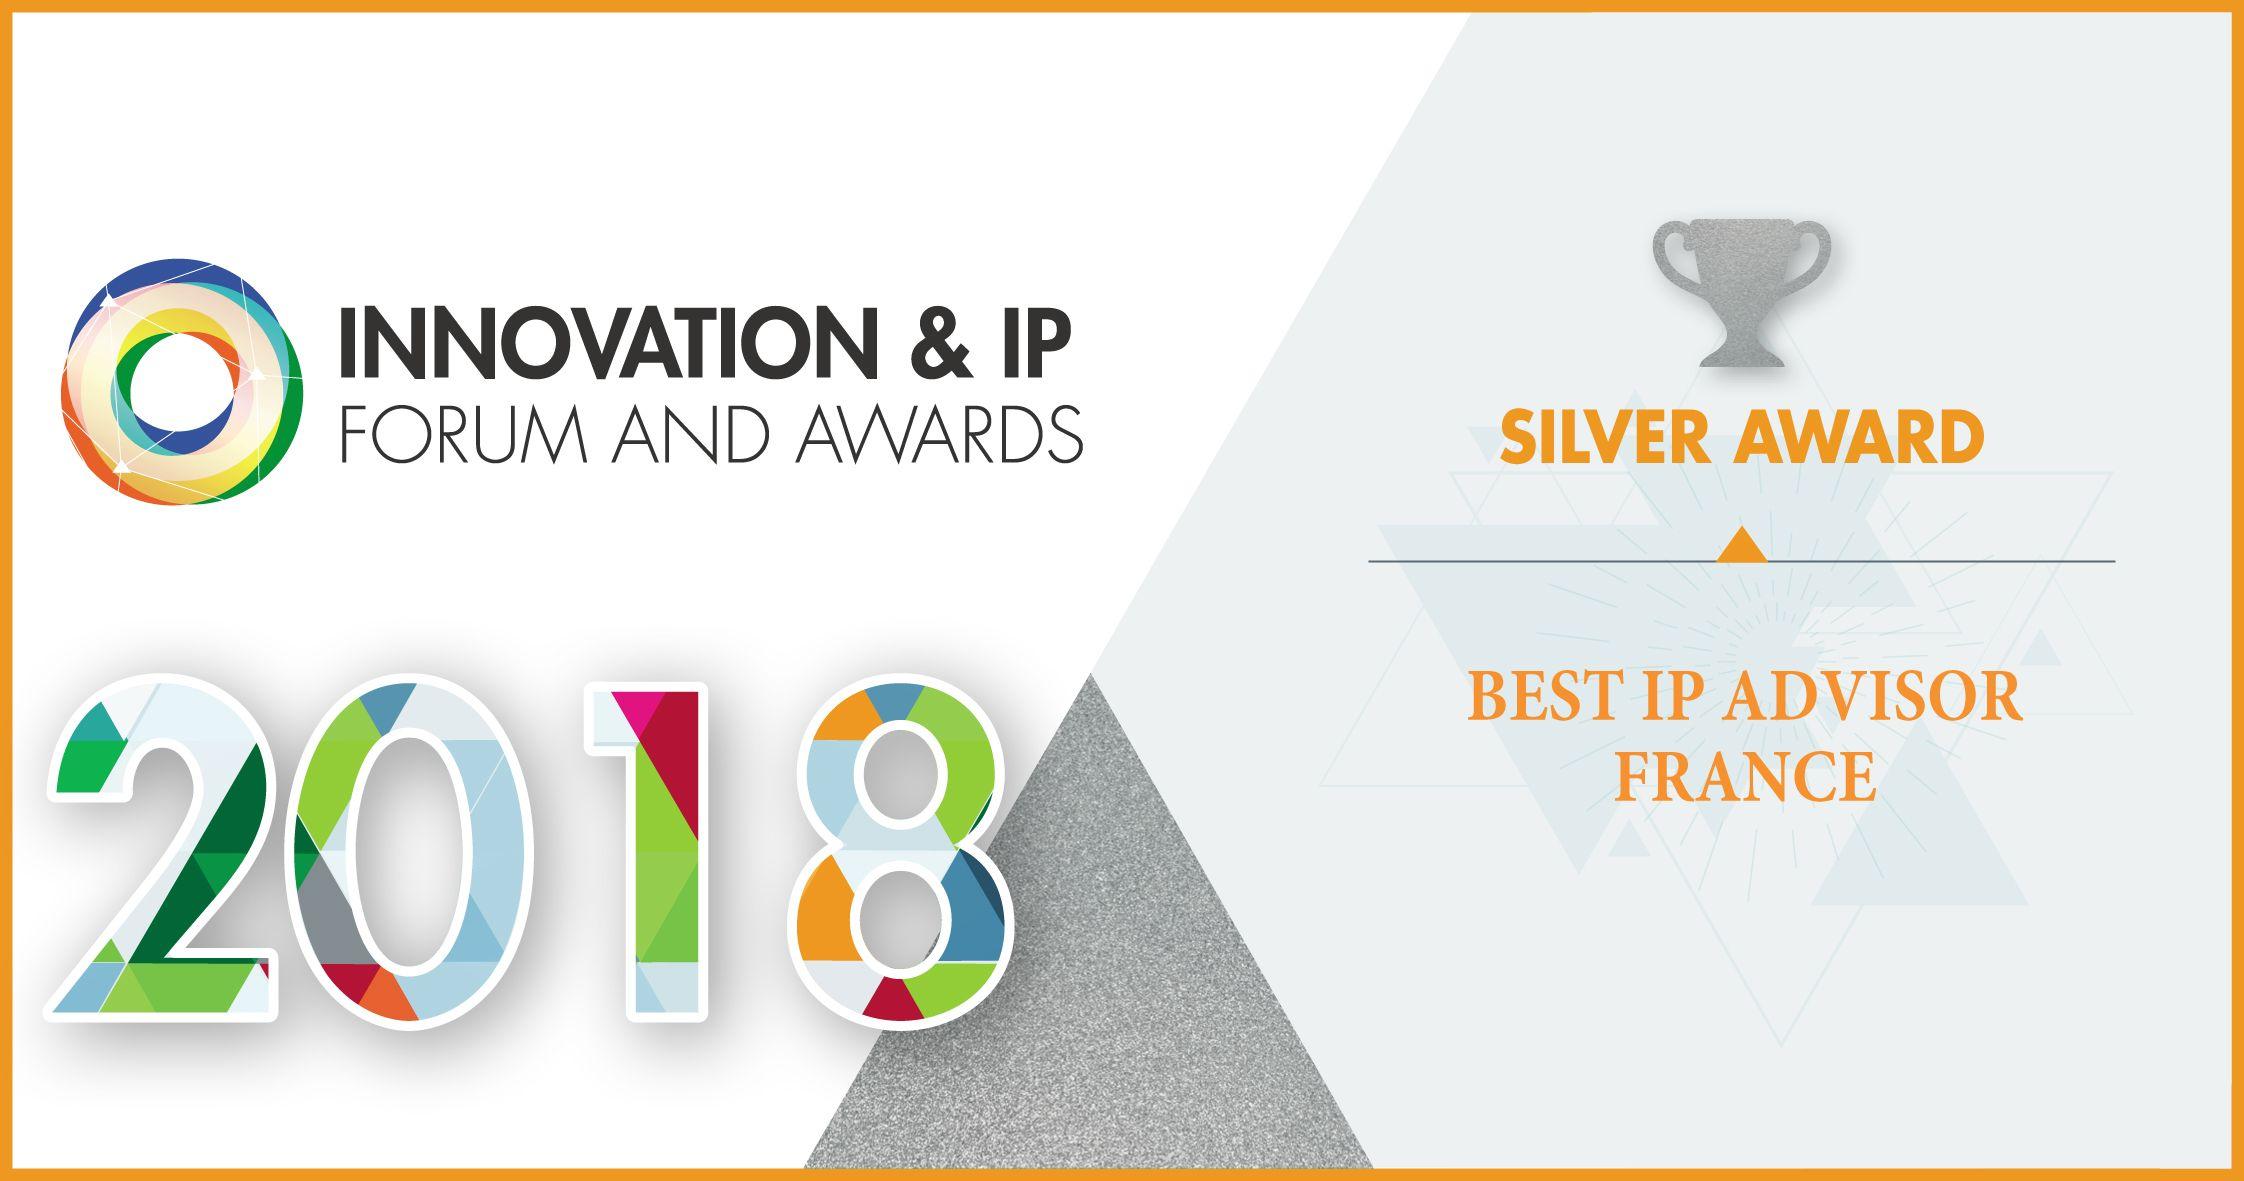 IPSIDE Silver Award Best IP Advisor France 2018